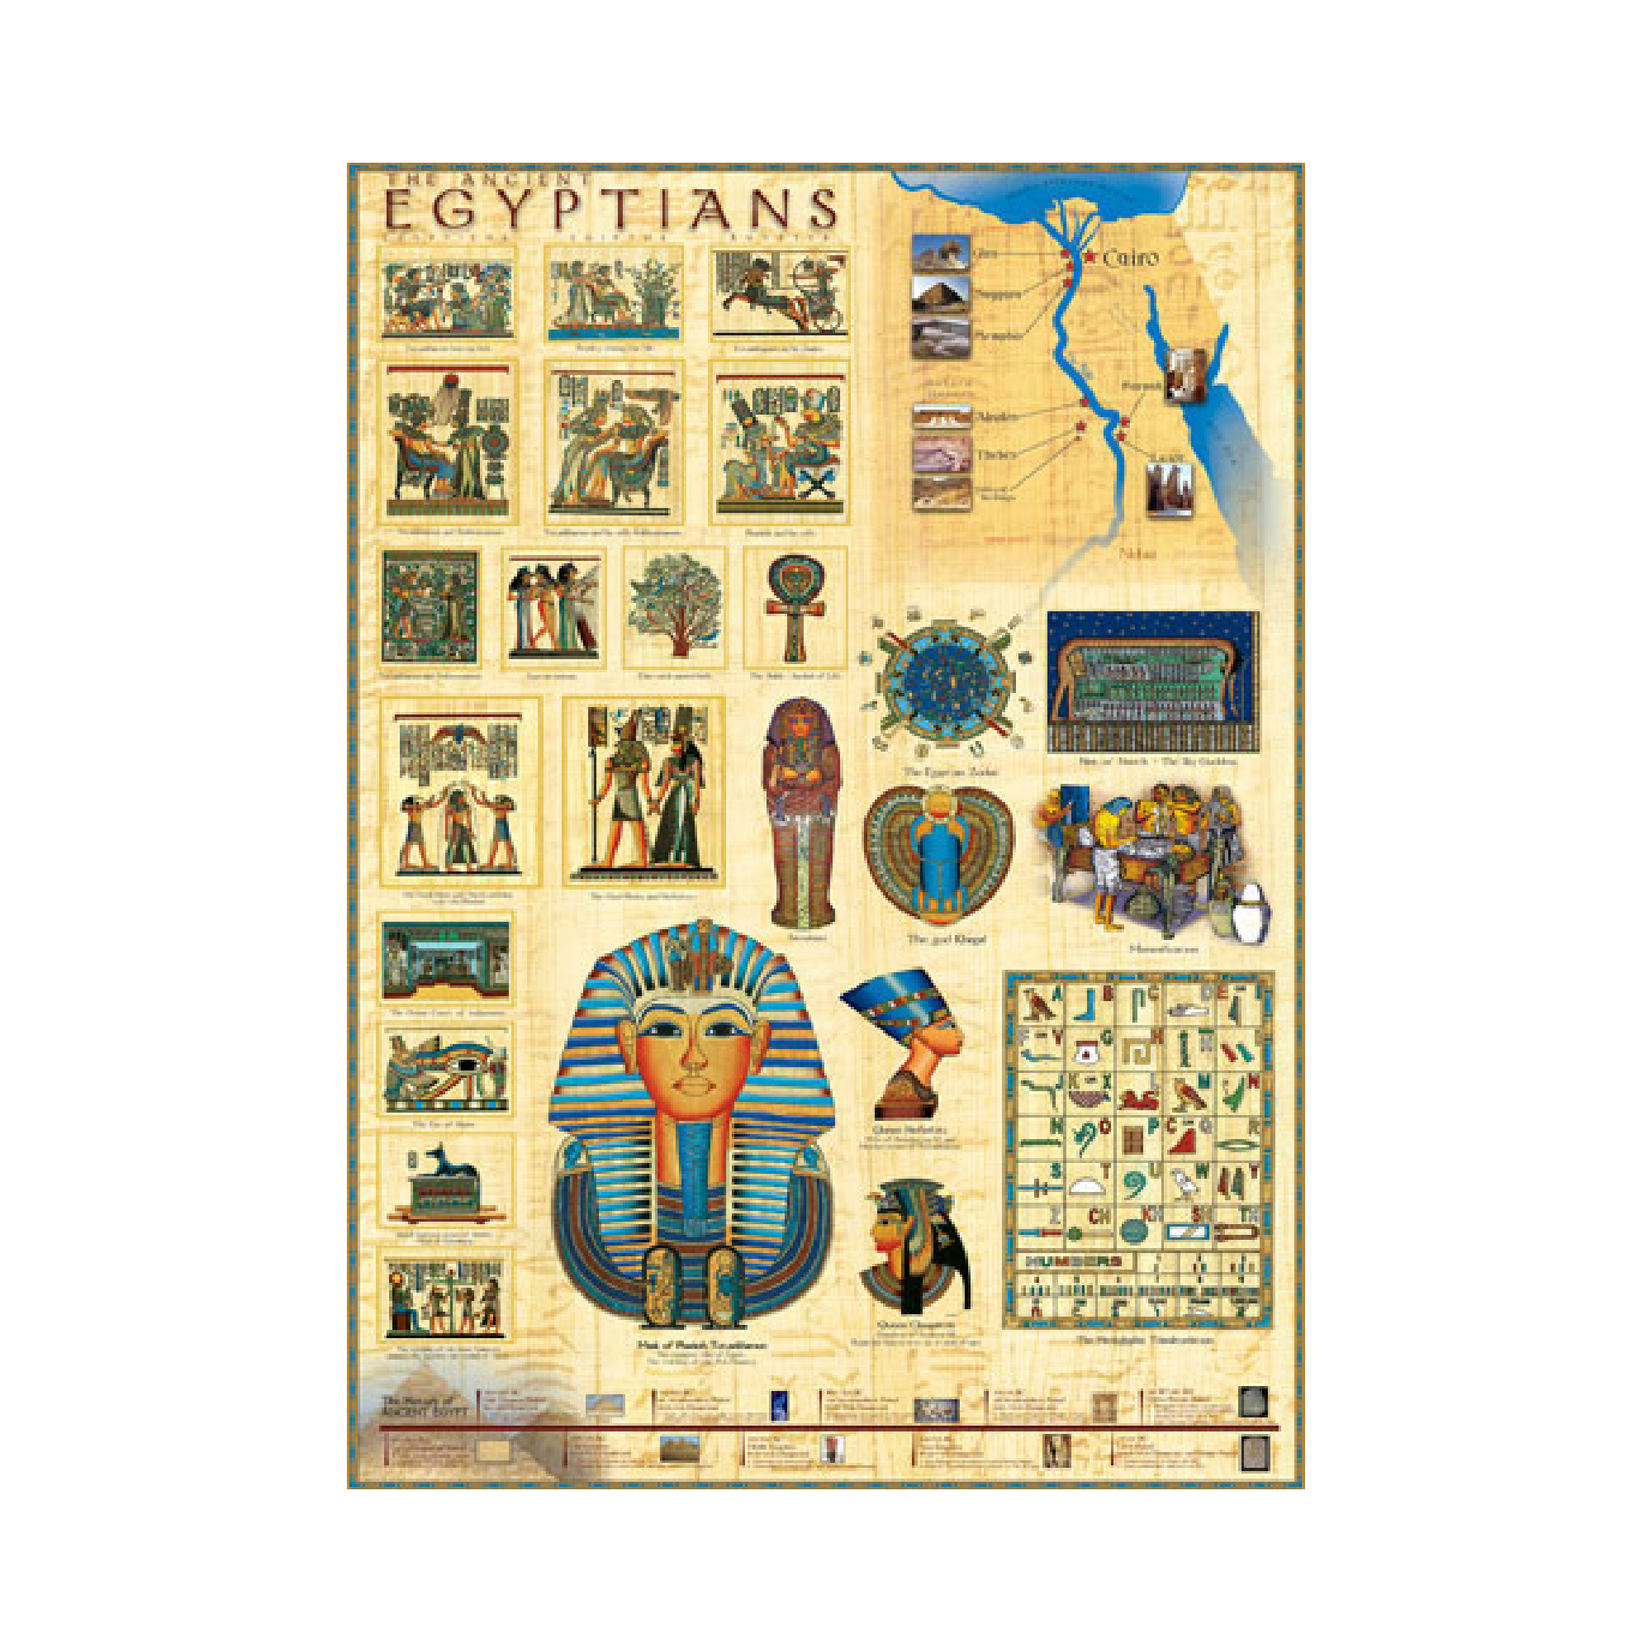 Eurographics Puzzle 1000: Ancient Egyptians